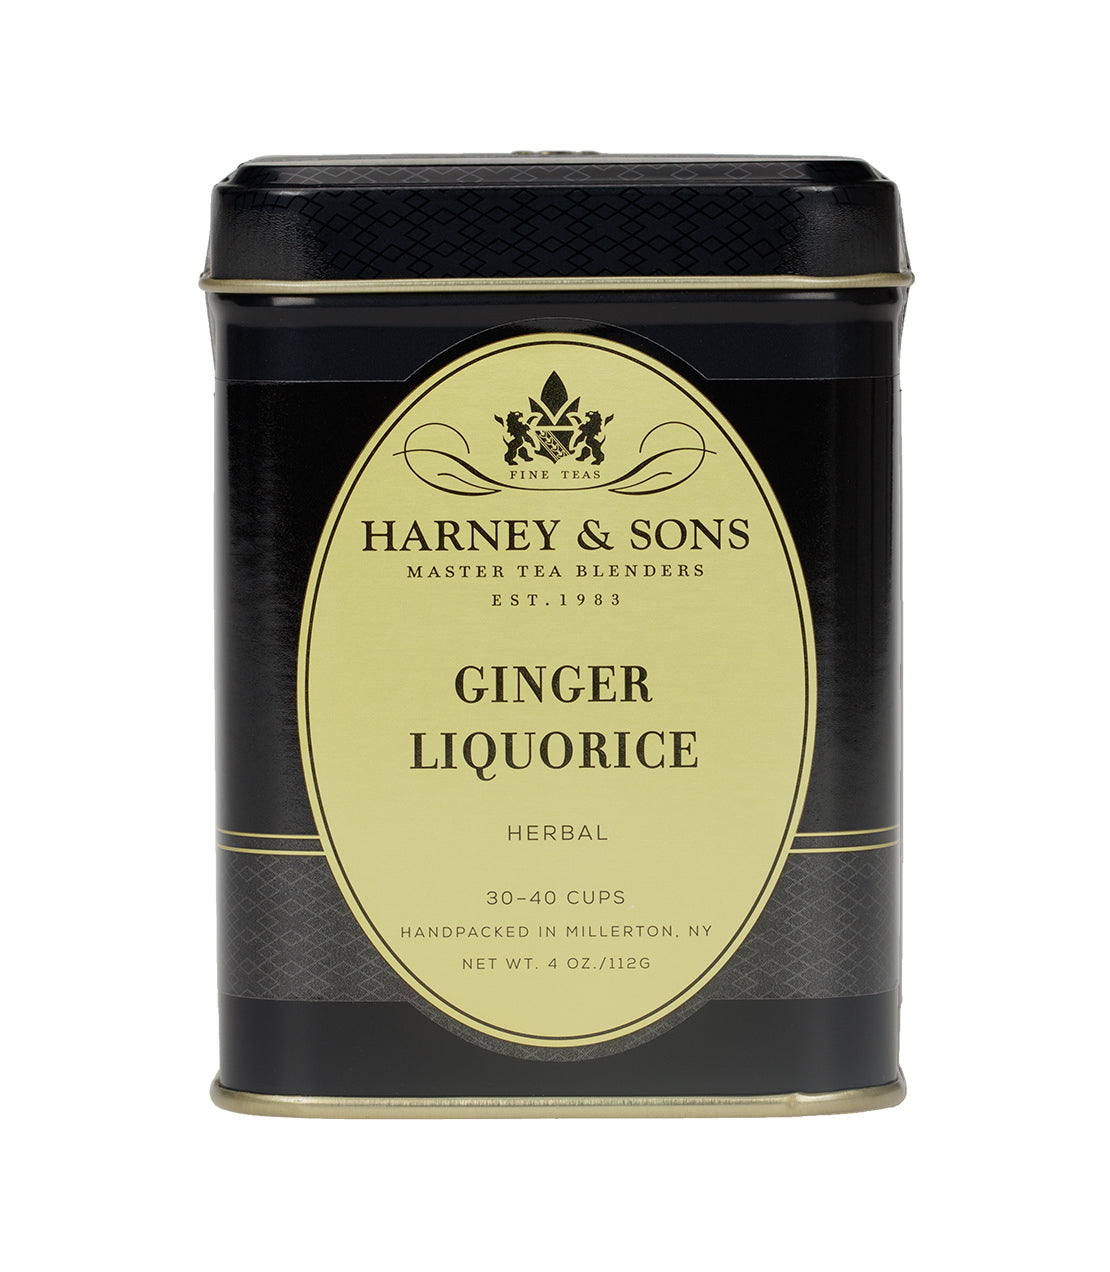 Ginger Liquorice - Loose 4 oz. Tin - Harney & Sons Fine Teas